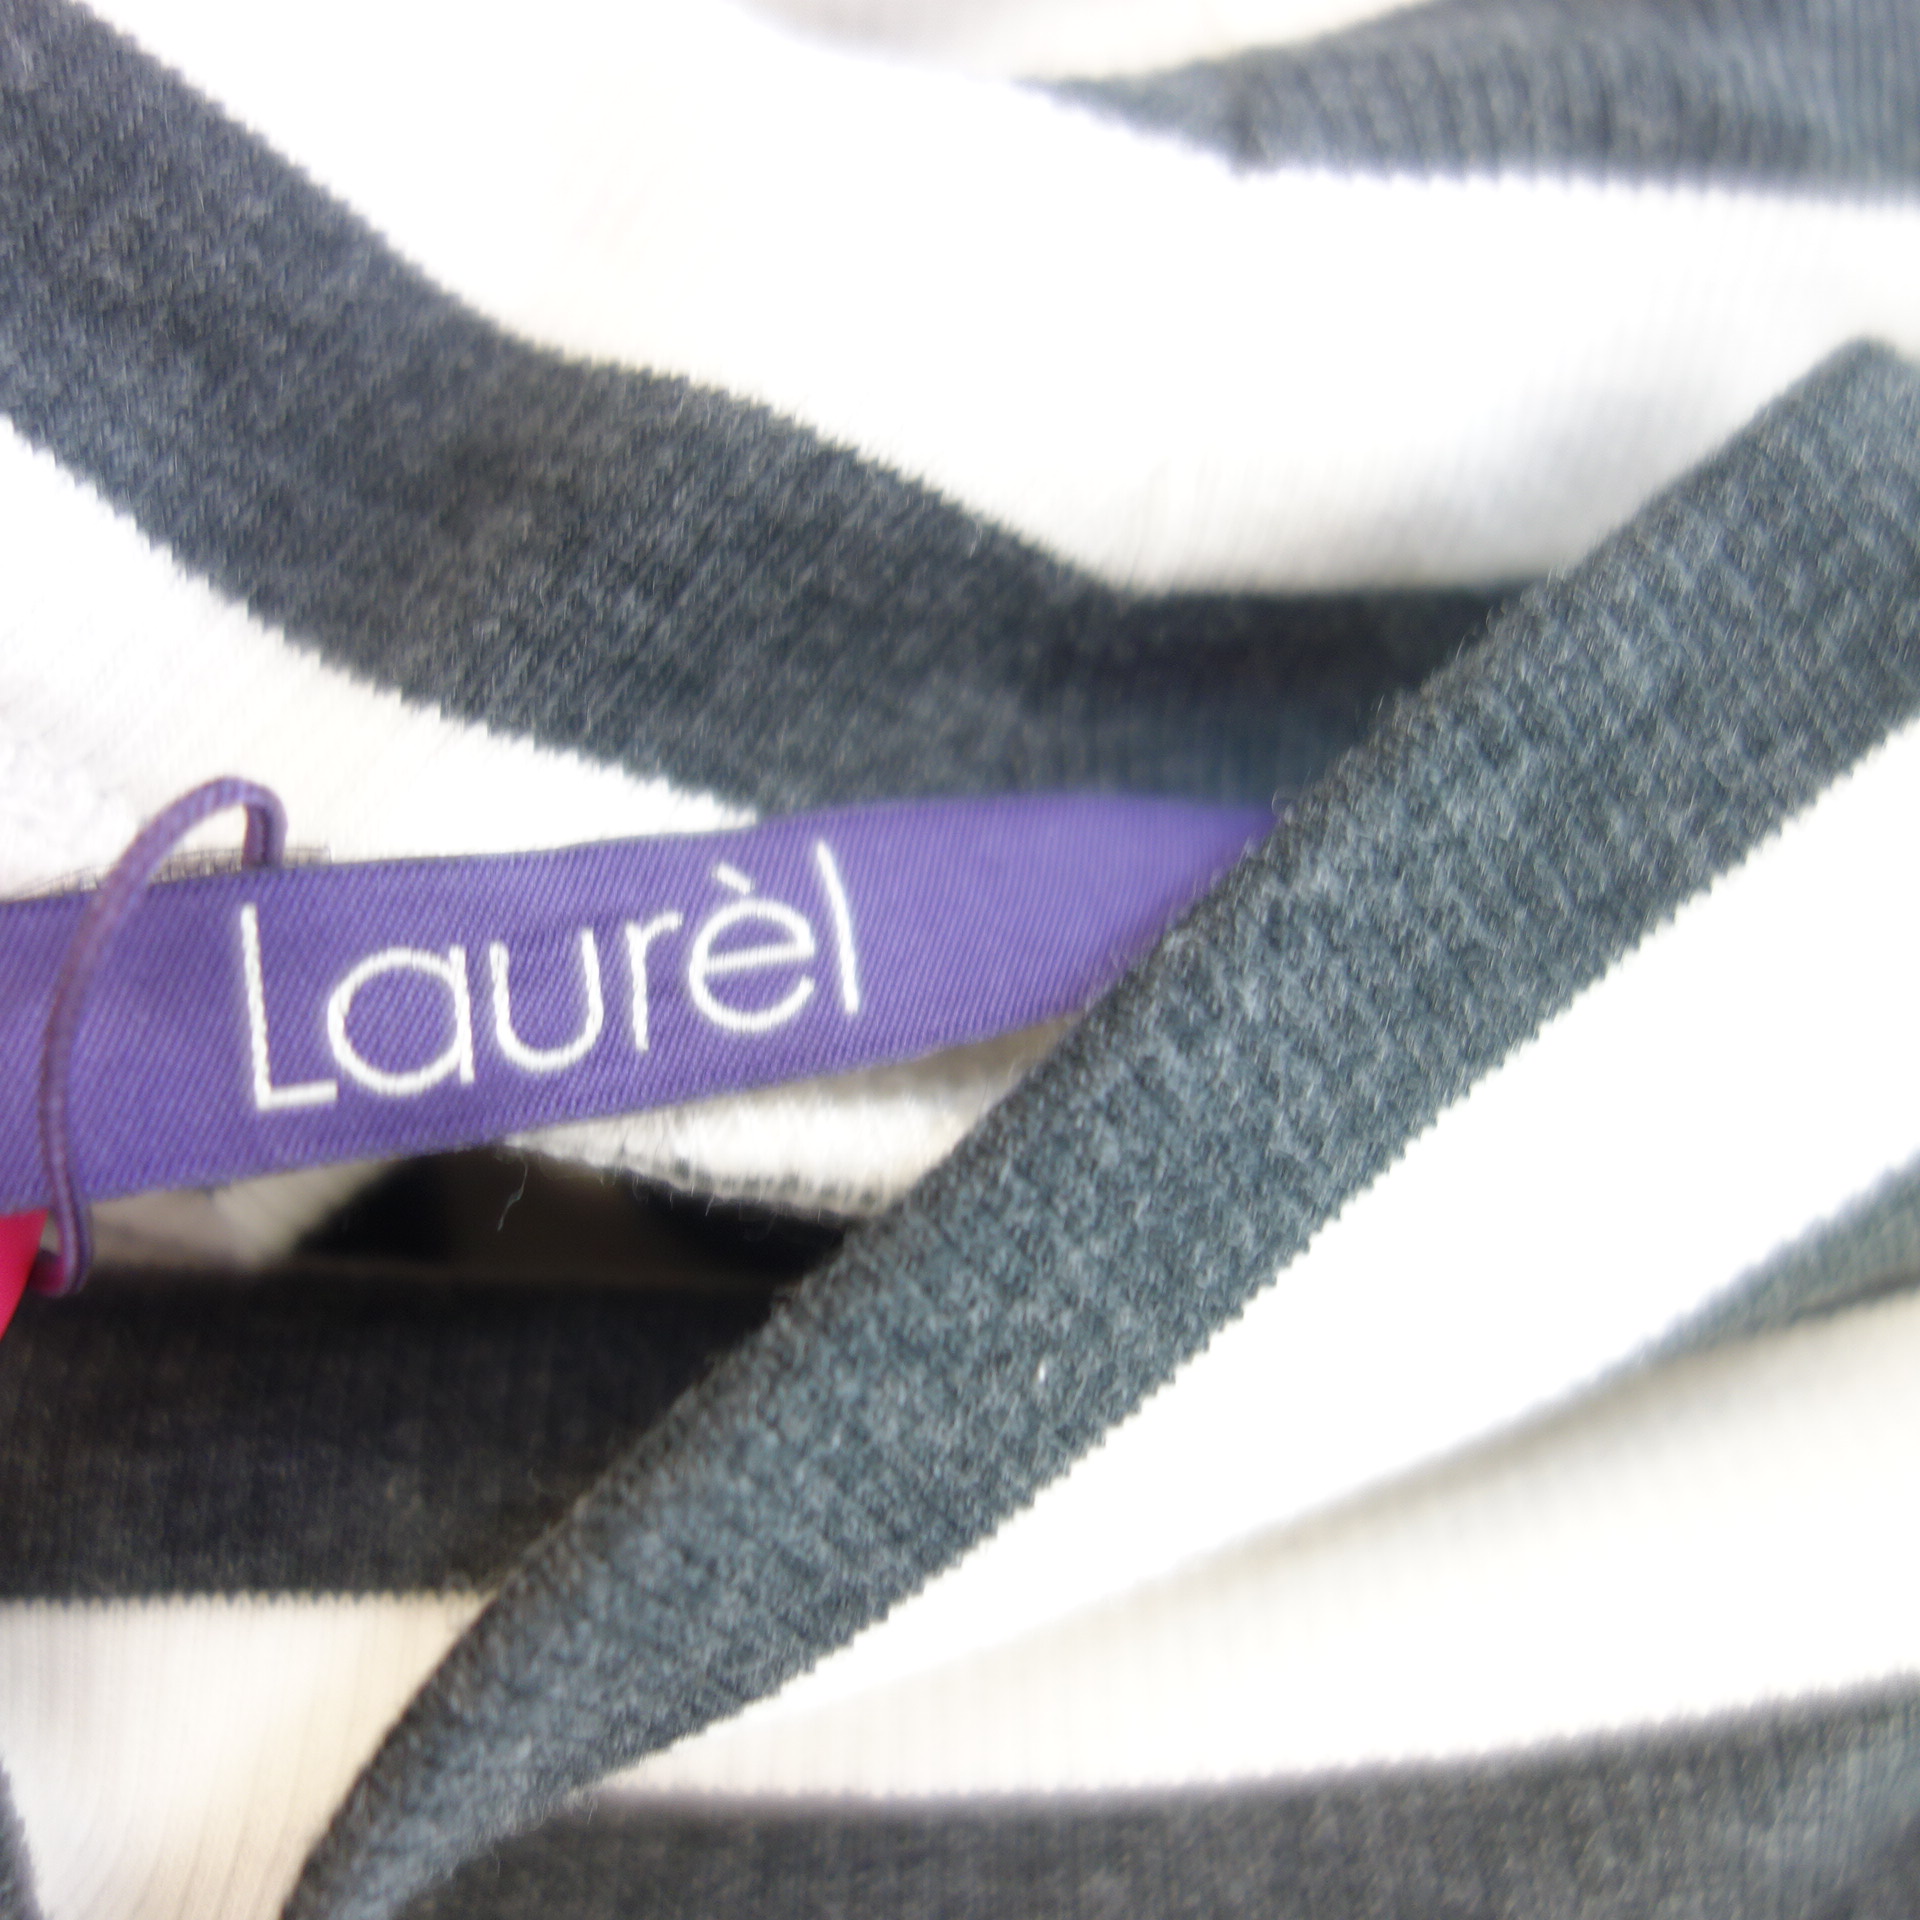 LAURÉL Laurel Damen Langarm Shirt Pullover Oberteil Jersey Schwarz Weiß Gr 42 ( 40 )